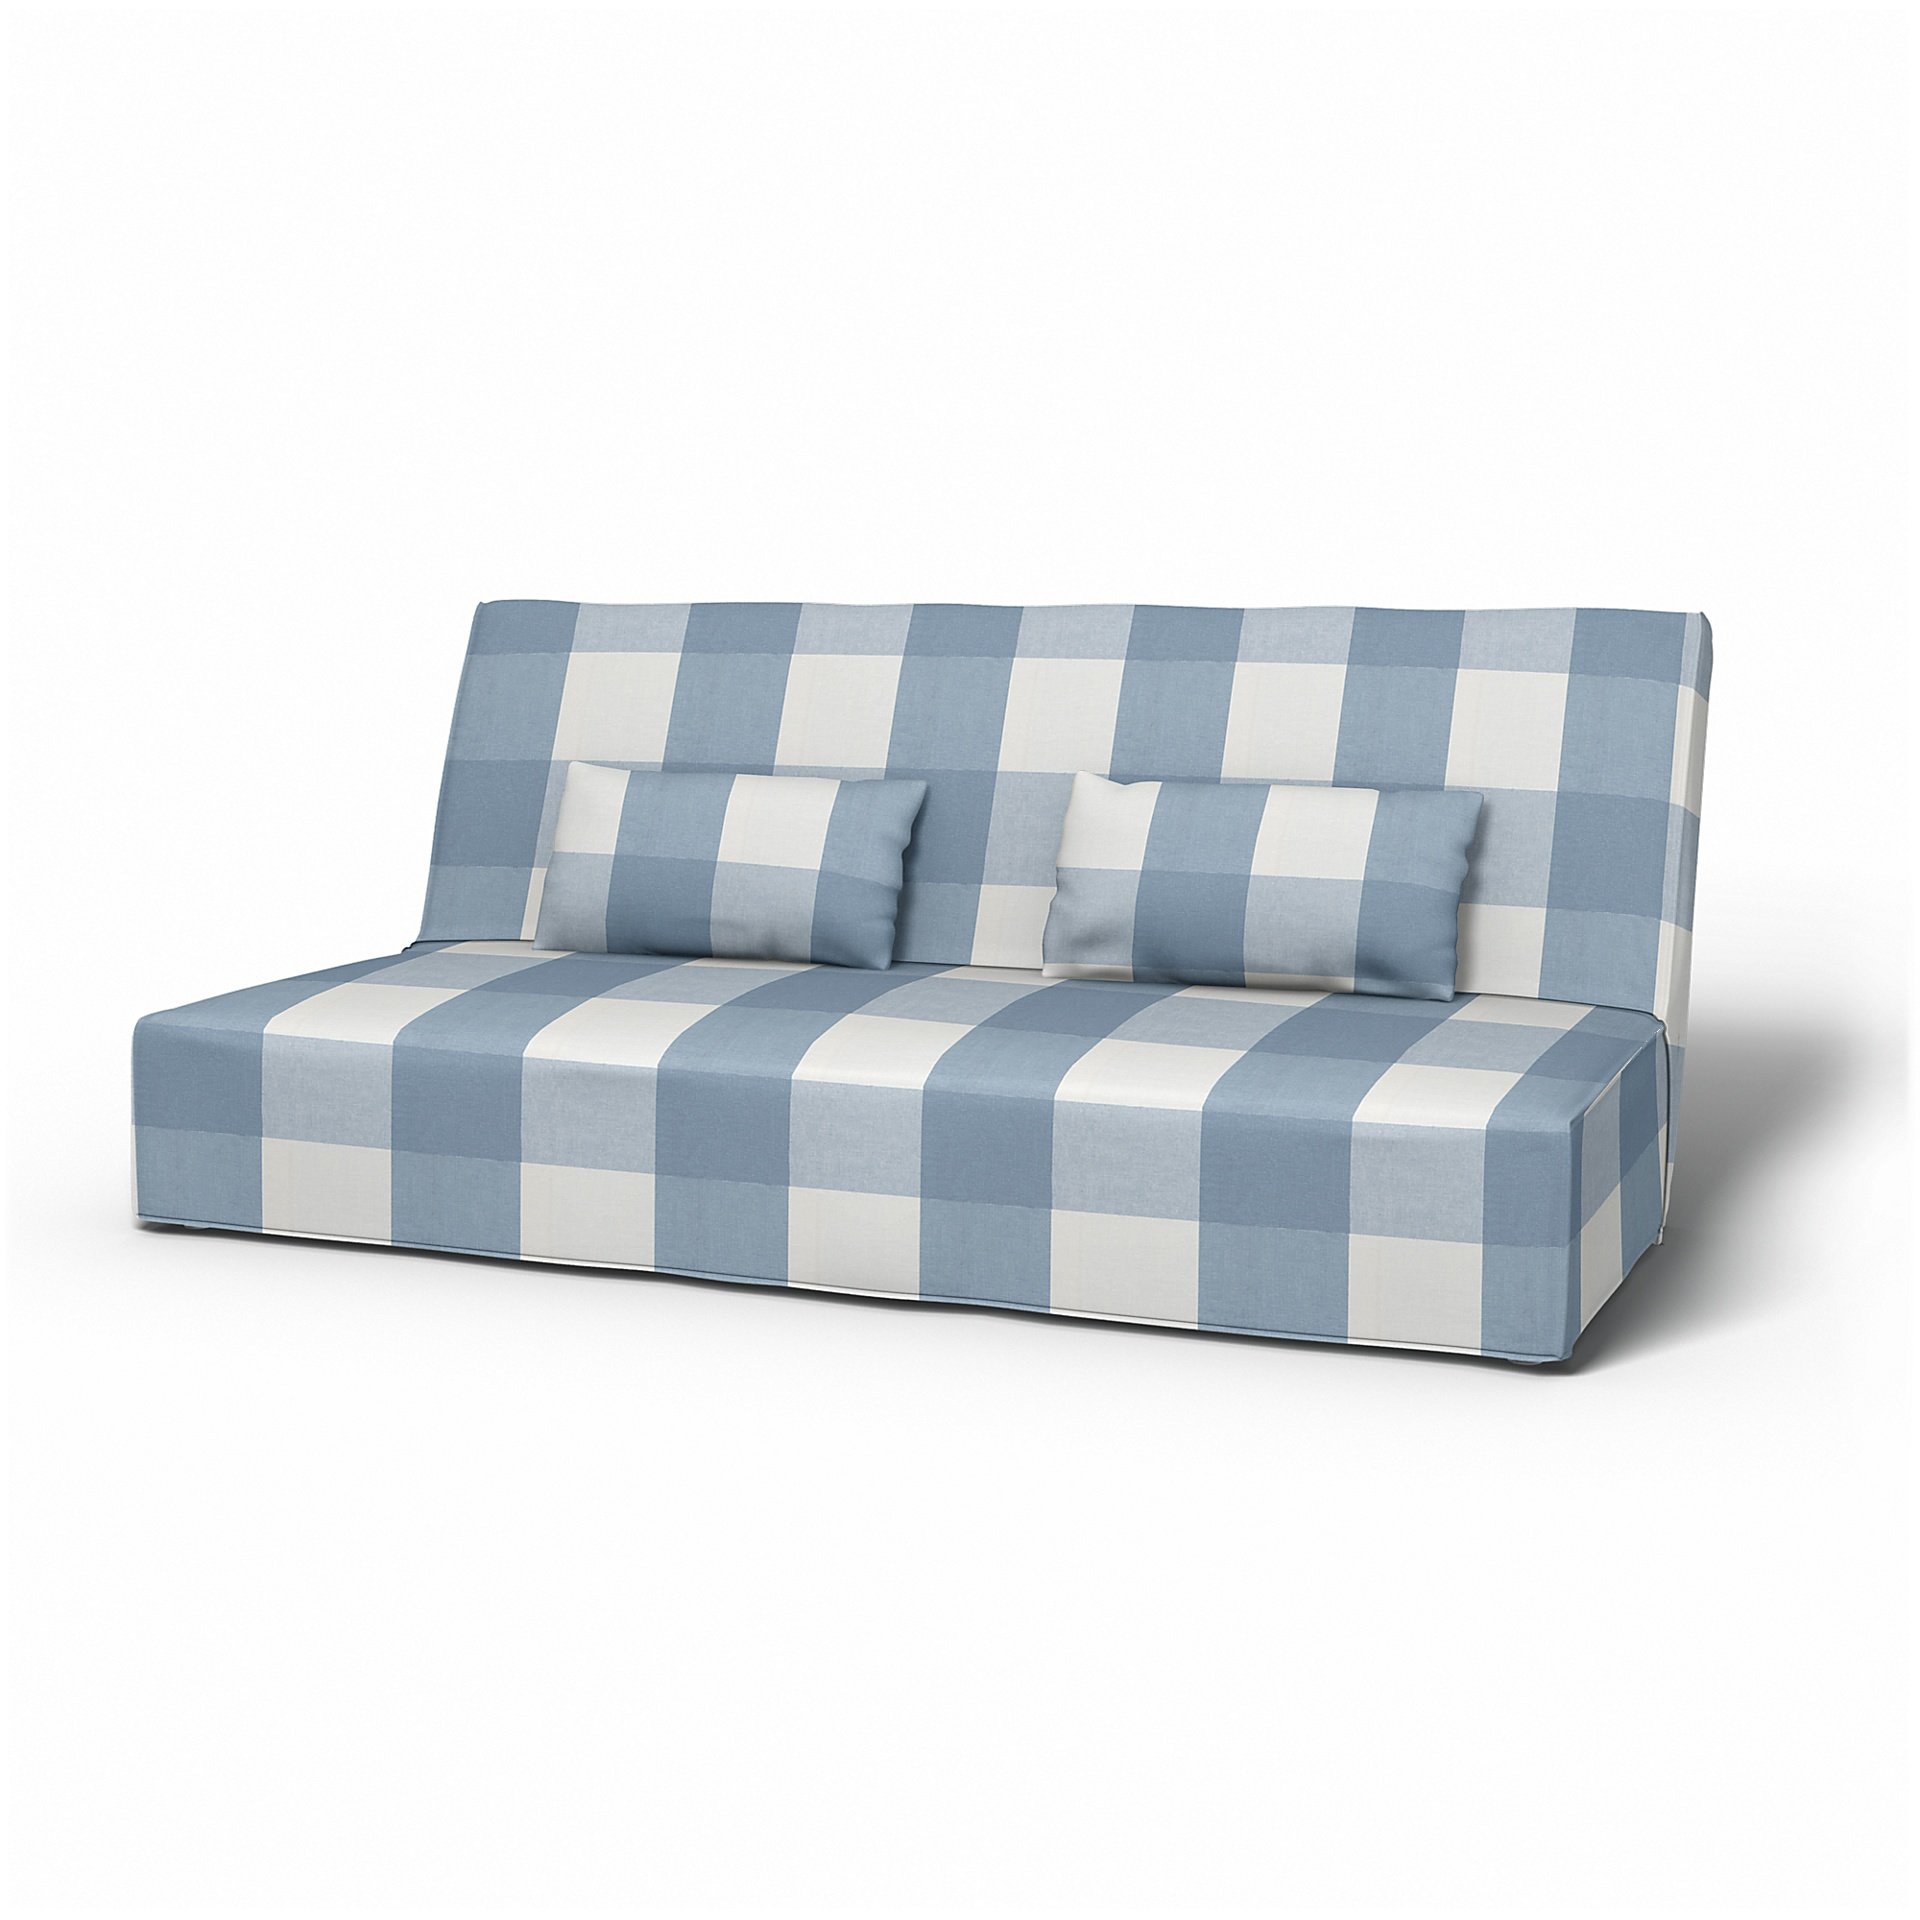 IKEA - Beddinge Sofa Bed Cover, Sky Blue, Linen - Bemz